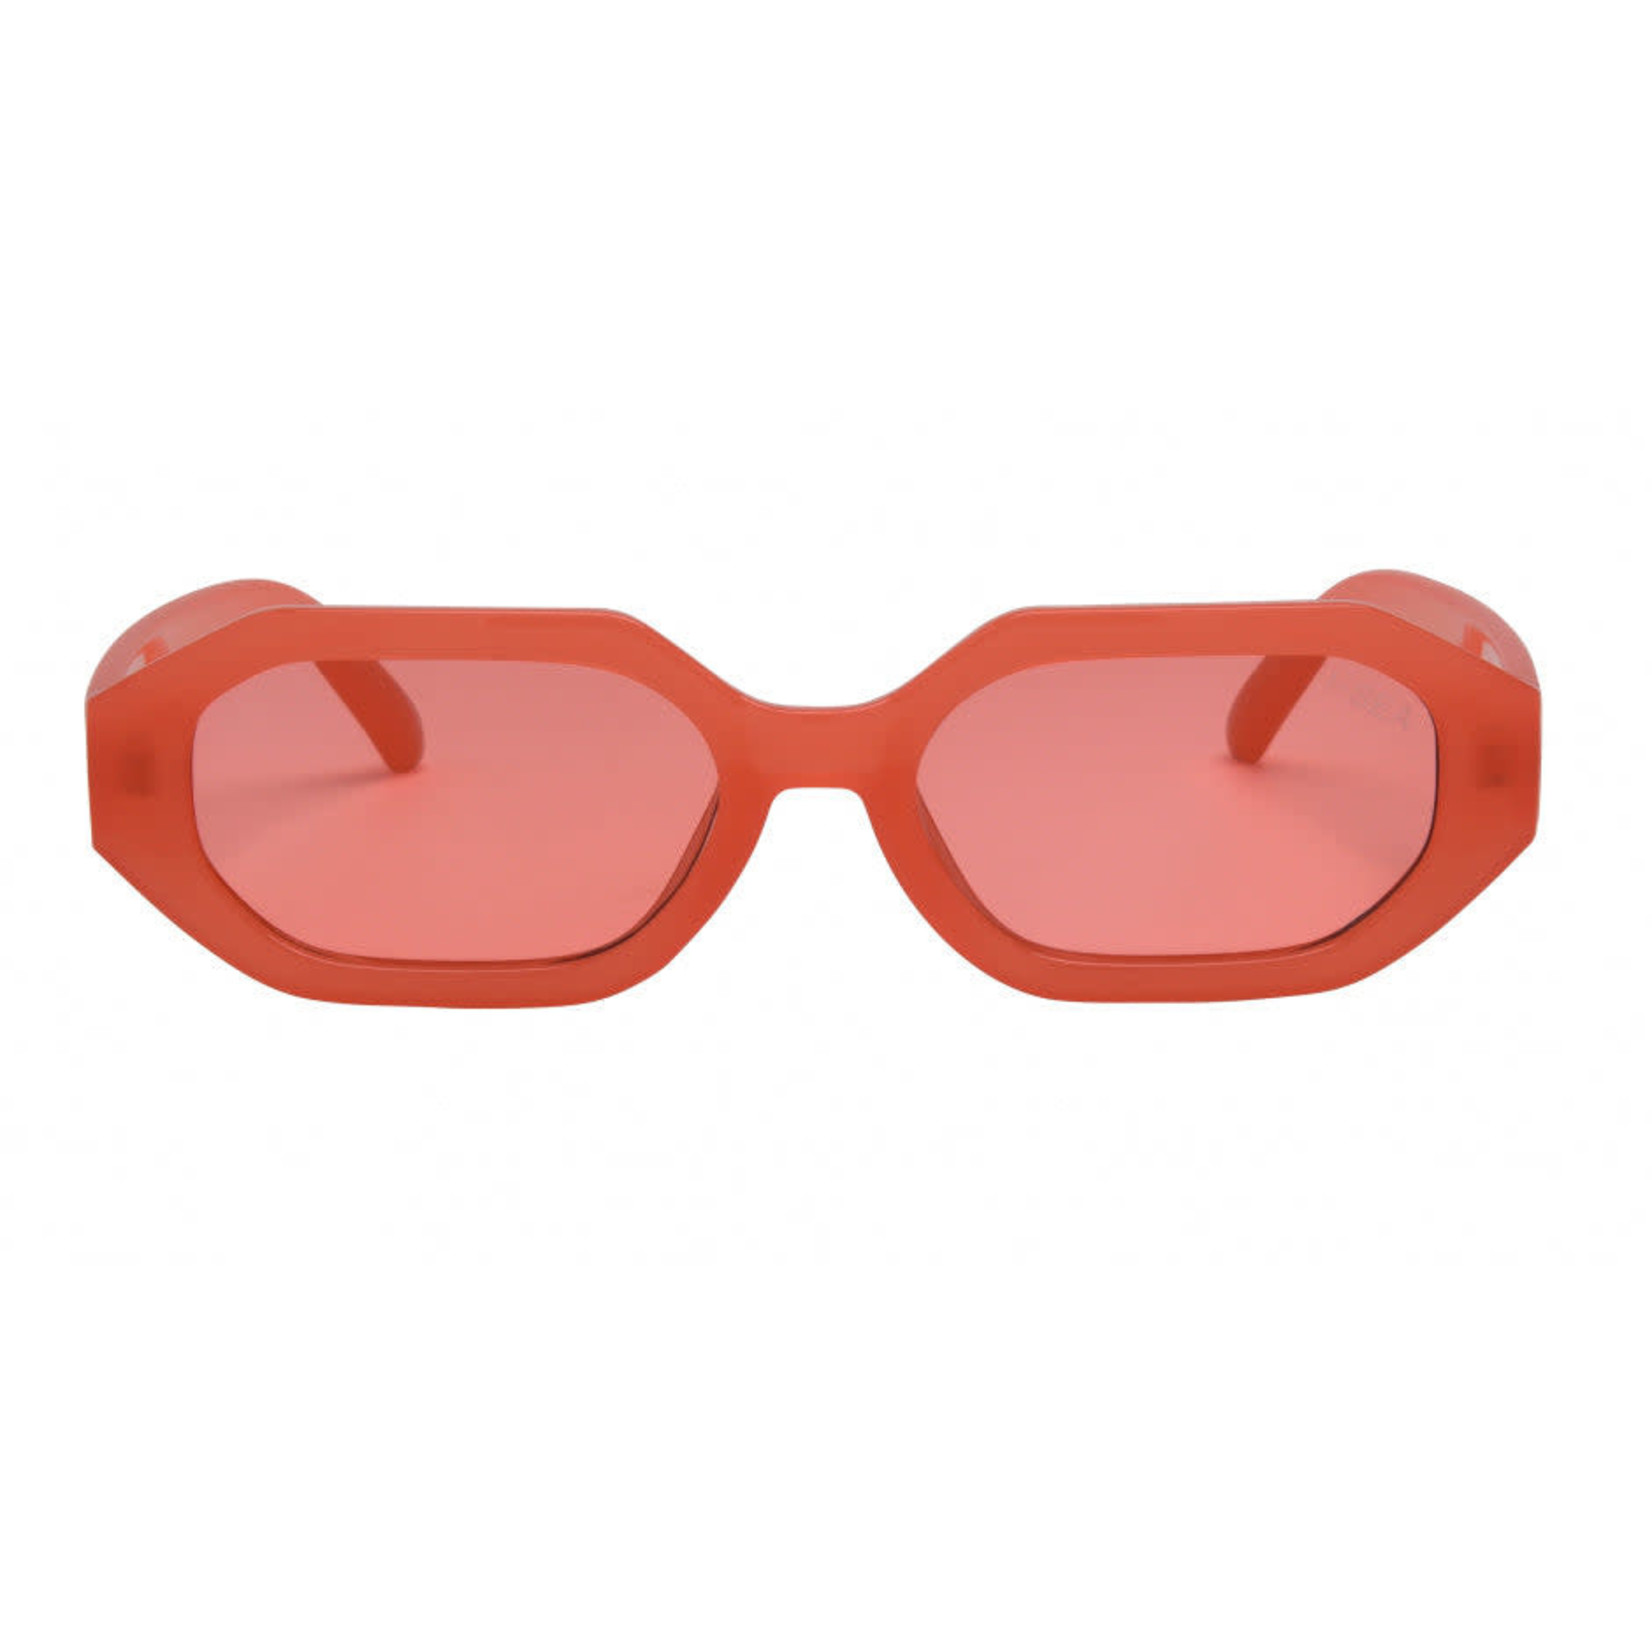 Mercer Sunglasses - Coral/Coral